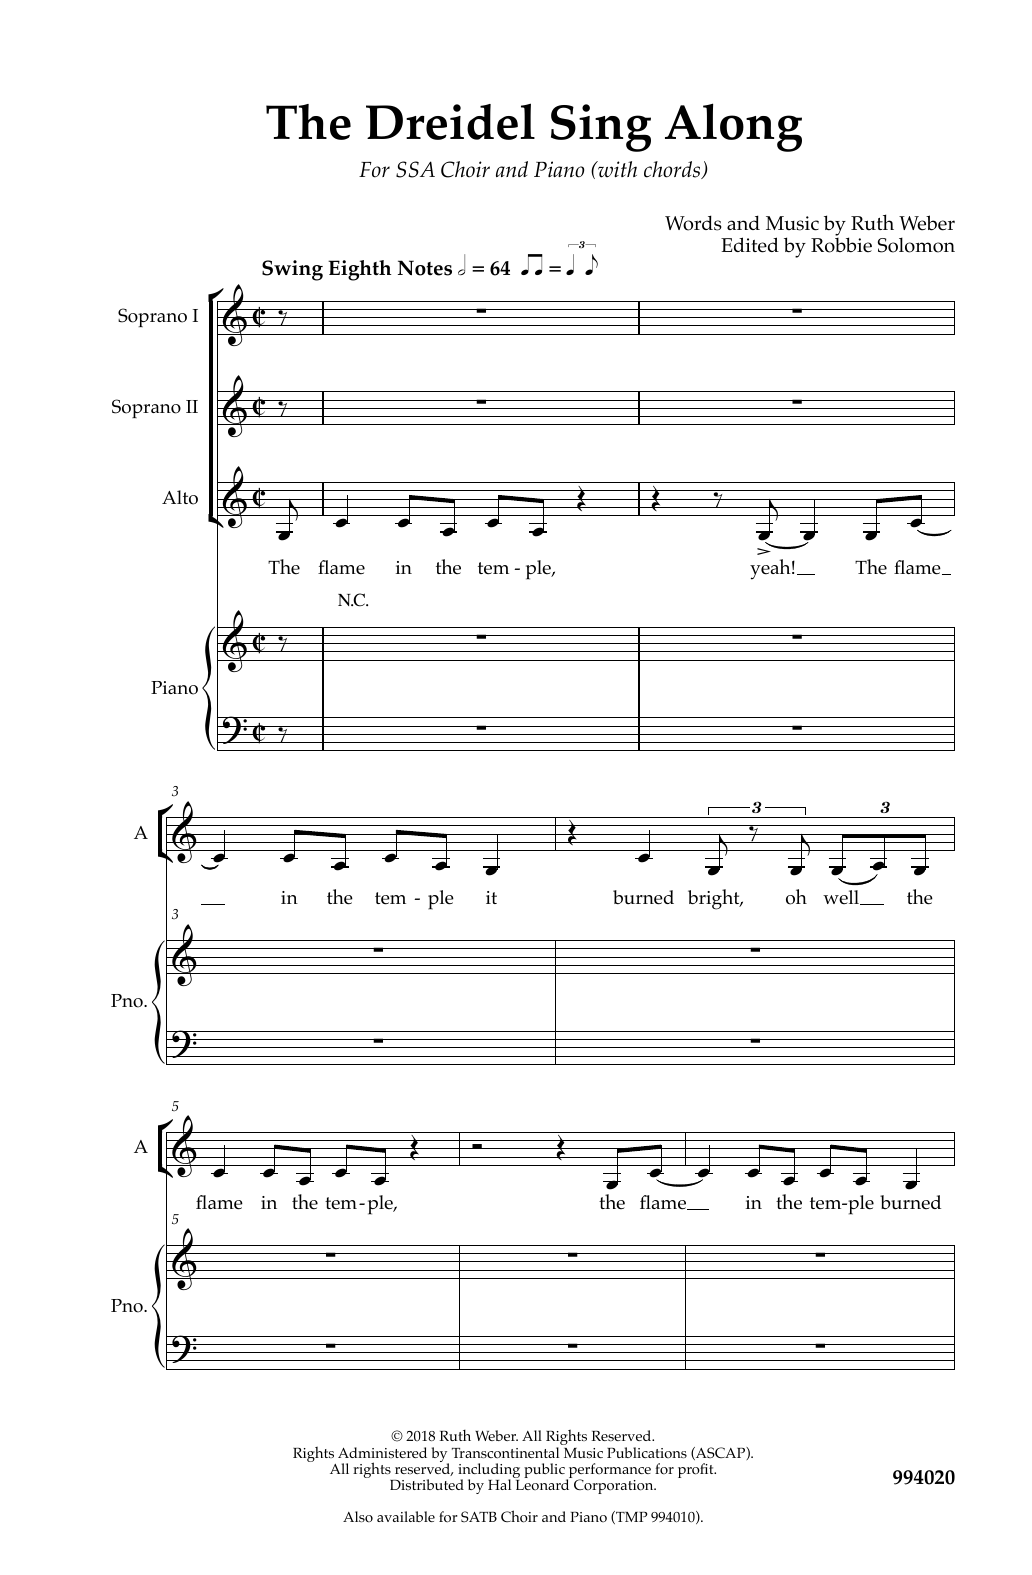 Robbie Solomon Dreidel Sing Along Sheet Music Notes & Chords for SSA Choir - Download or Print PDF